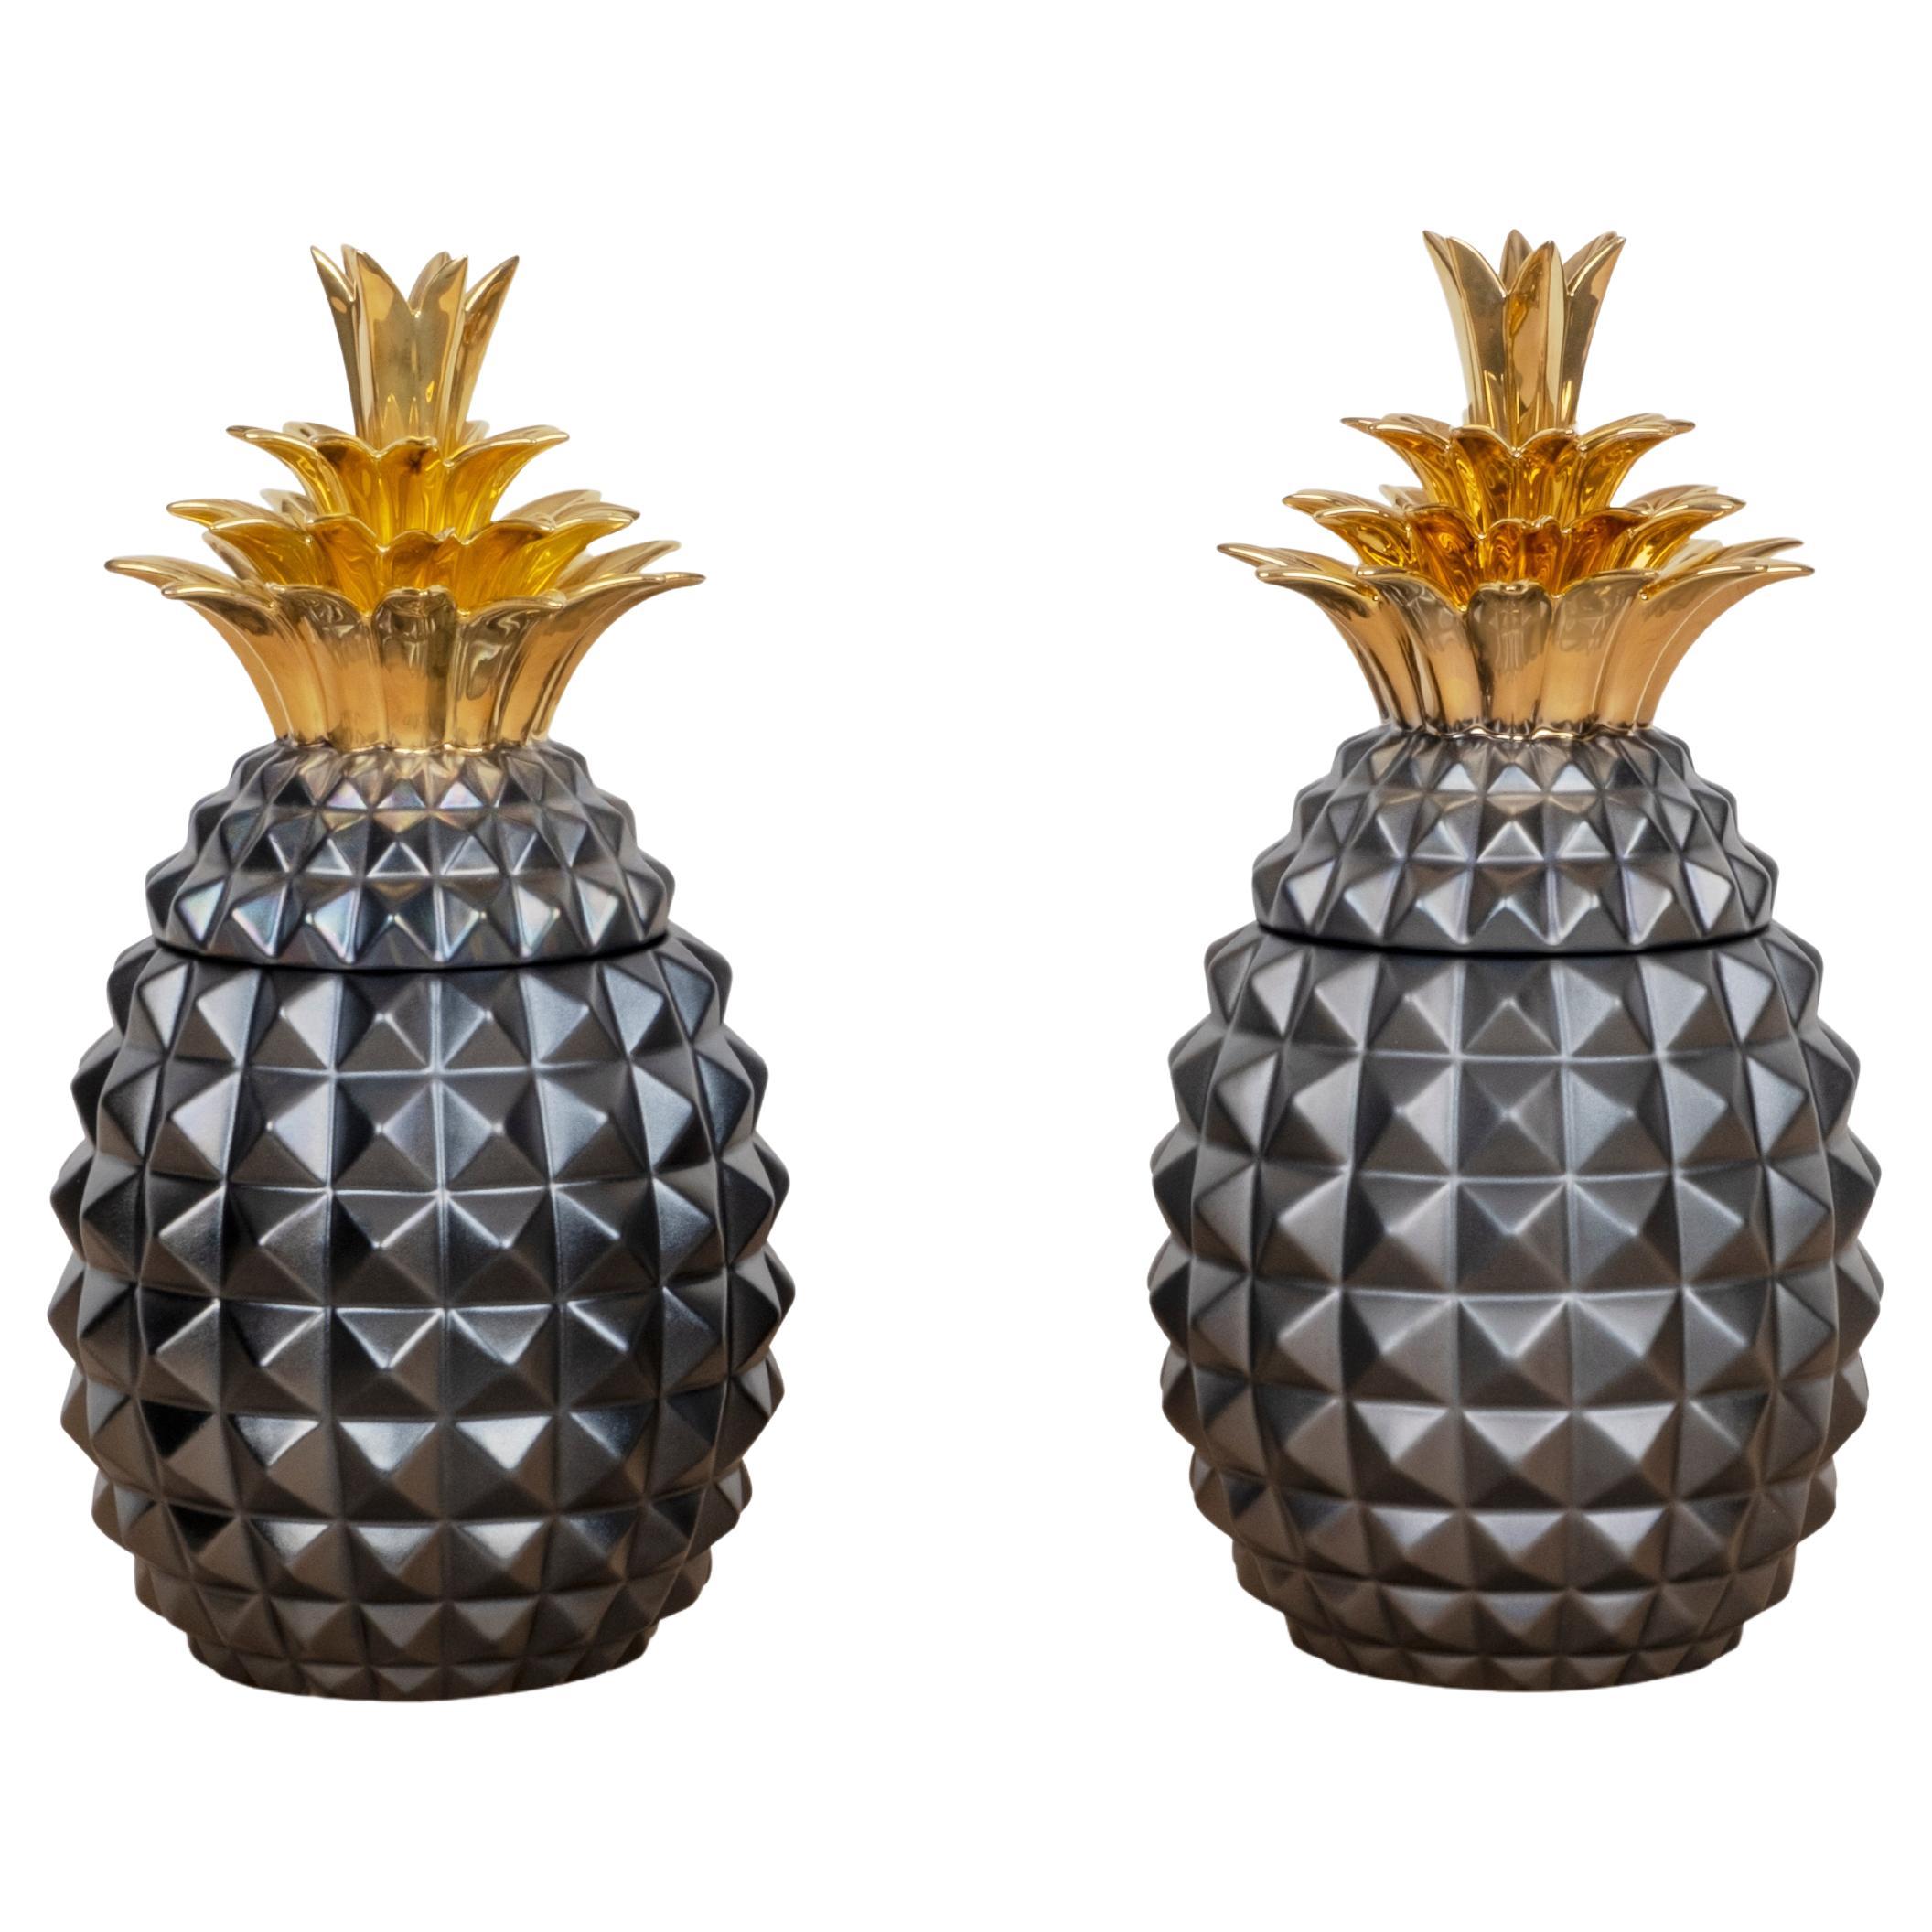 Set/2 Pineapple Ceramic Pots, Black, Handmade in Portugal by Lusitanus Home